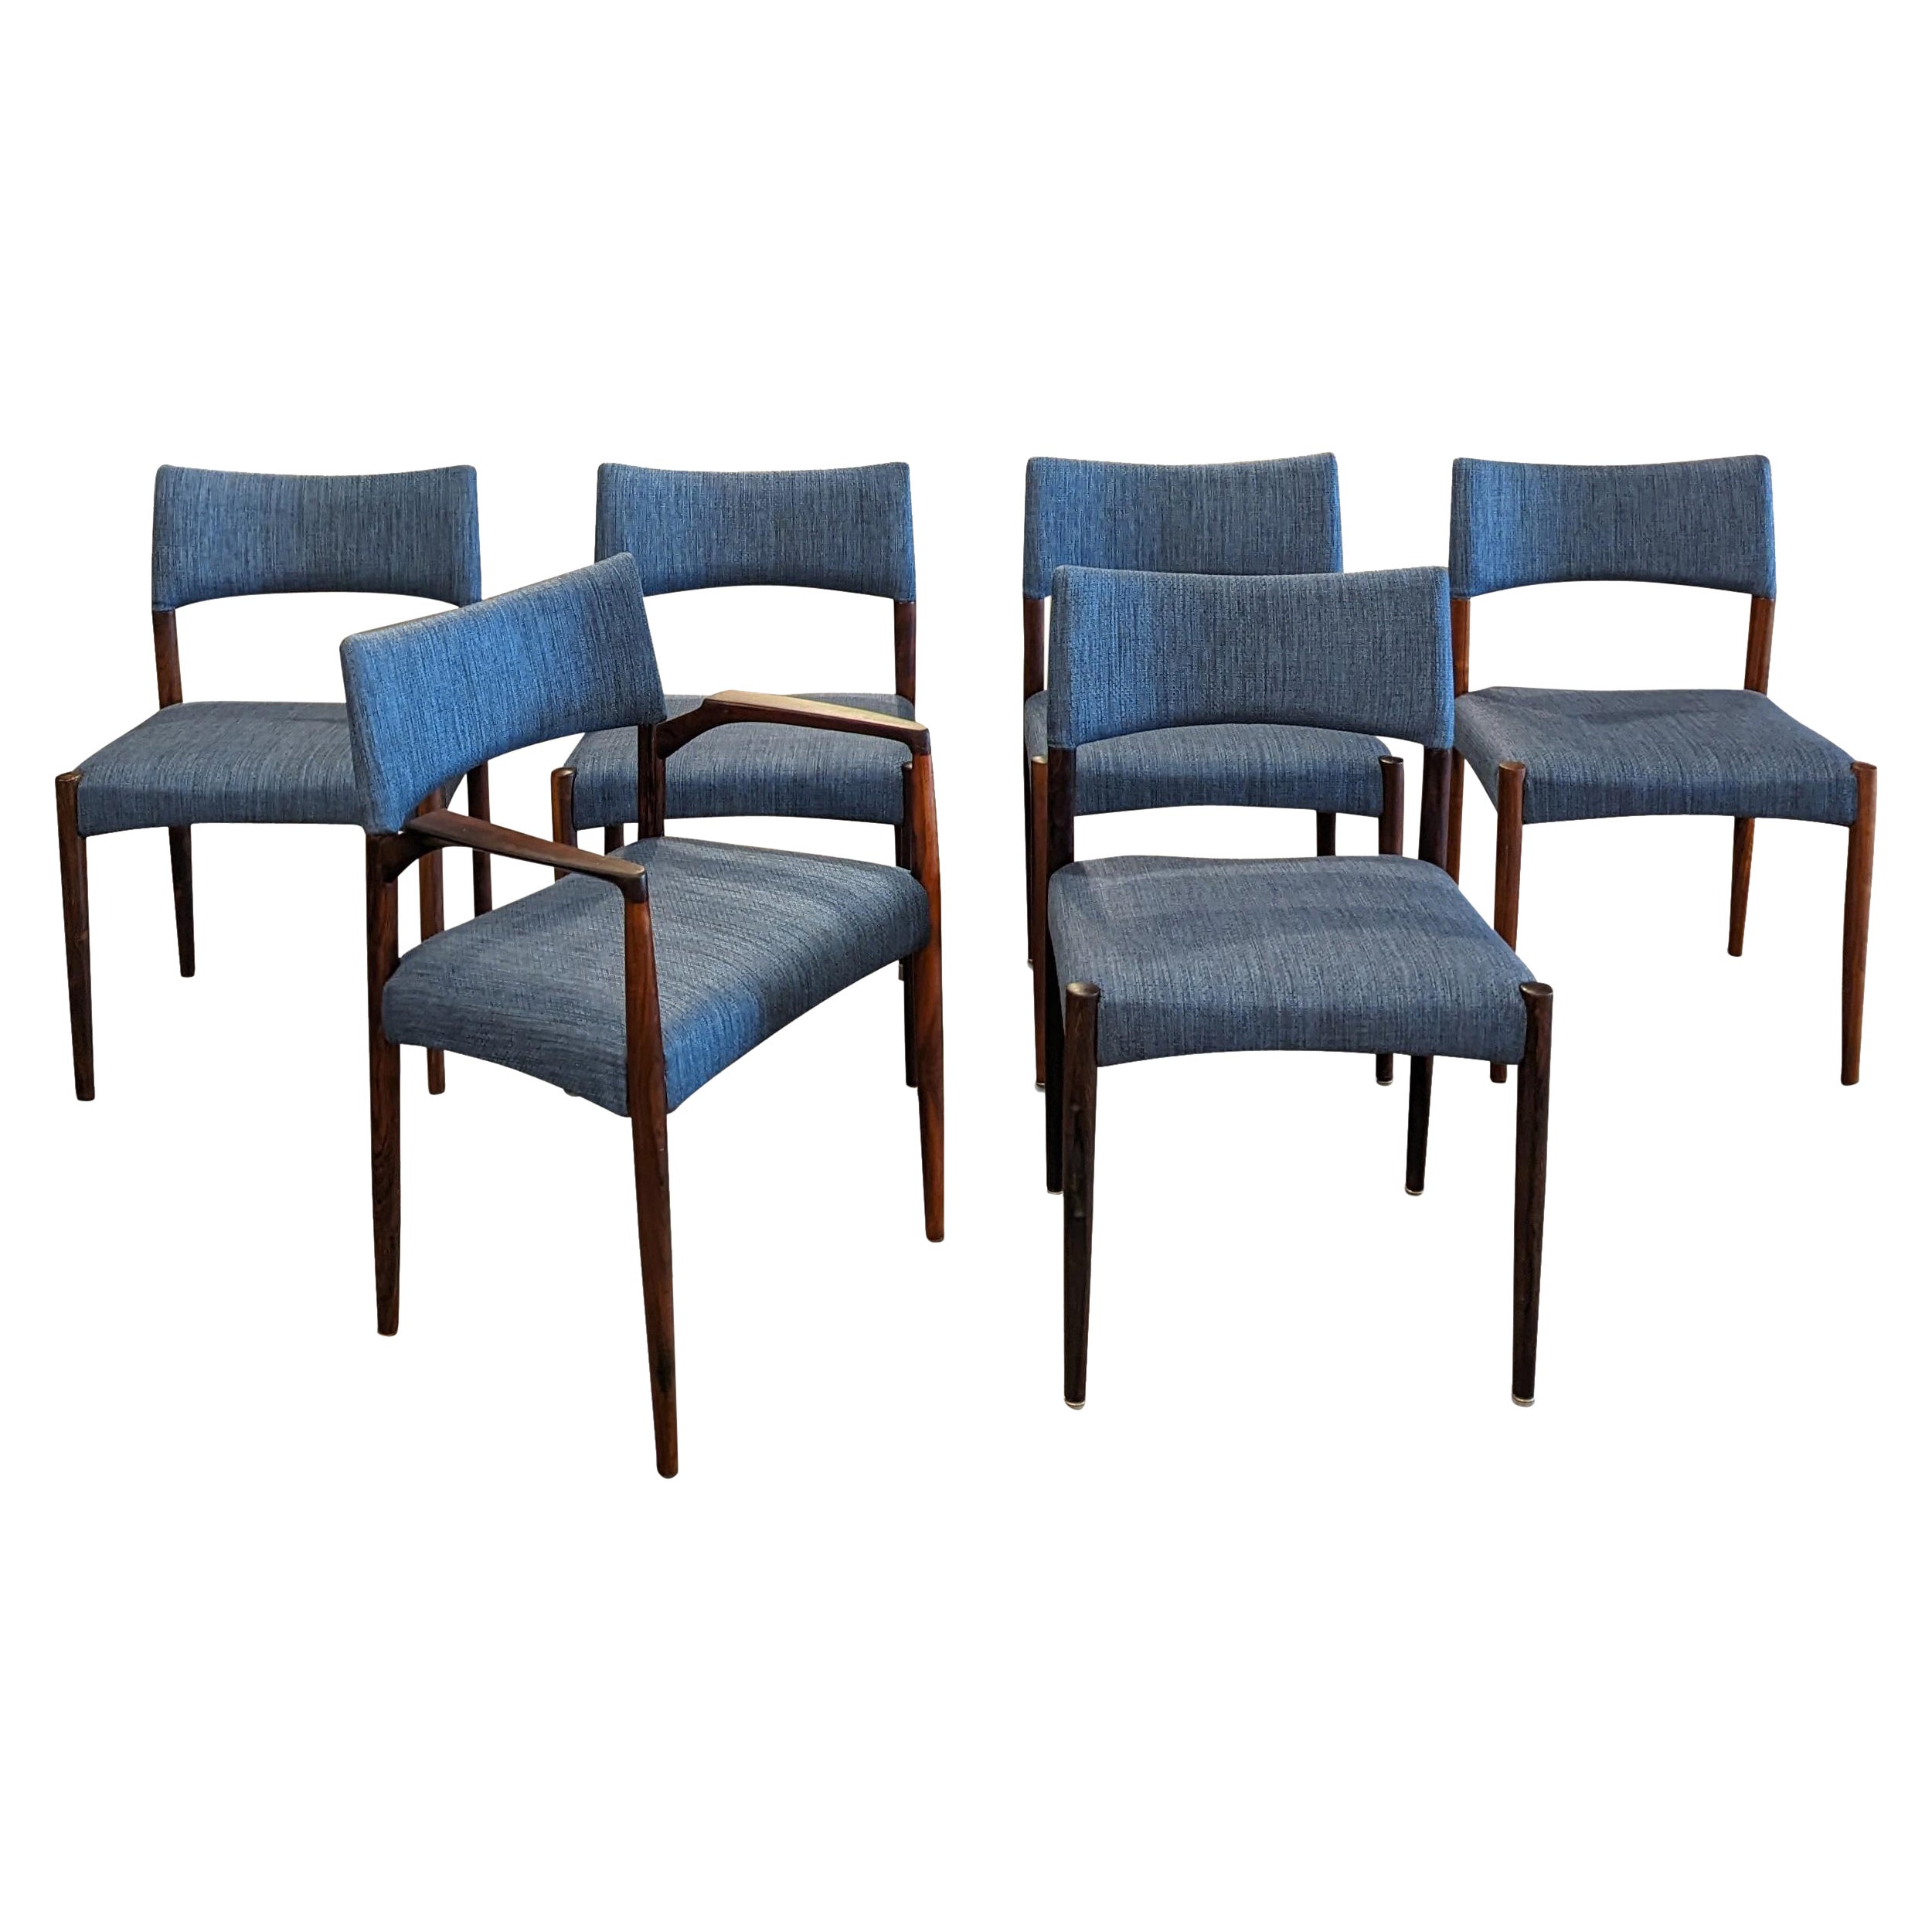 6 Aksel Bender Madsen Rosewood Dining Chairs - 072342 Vintage Danish Mid Century